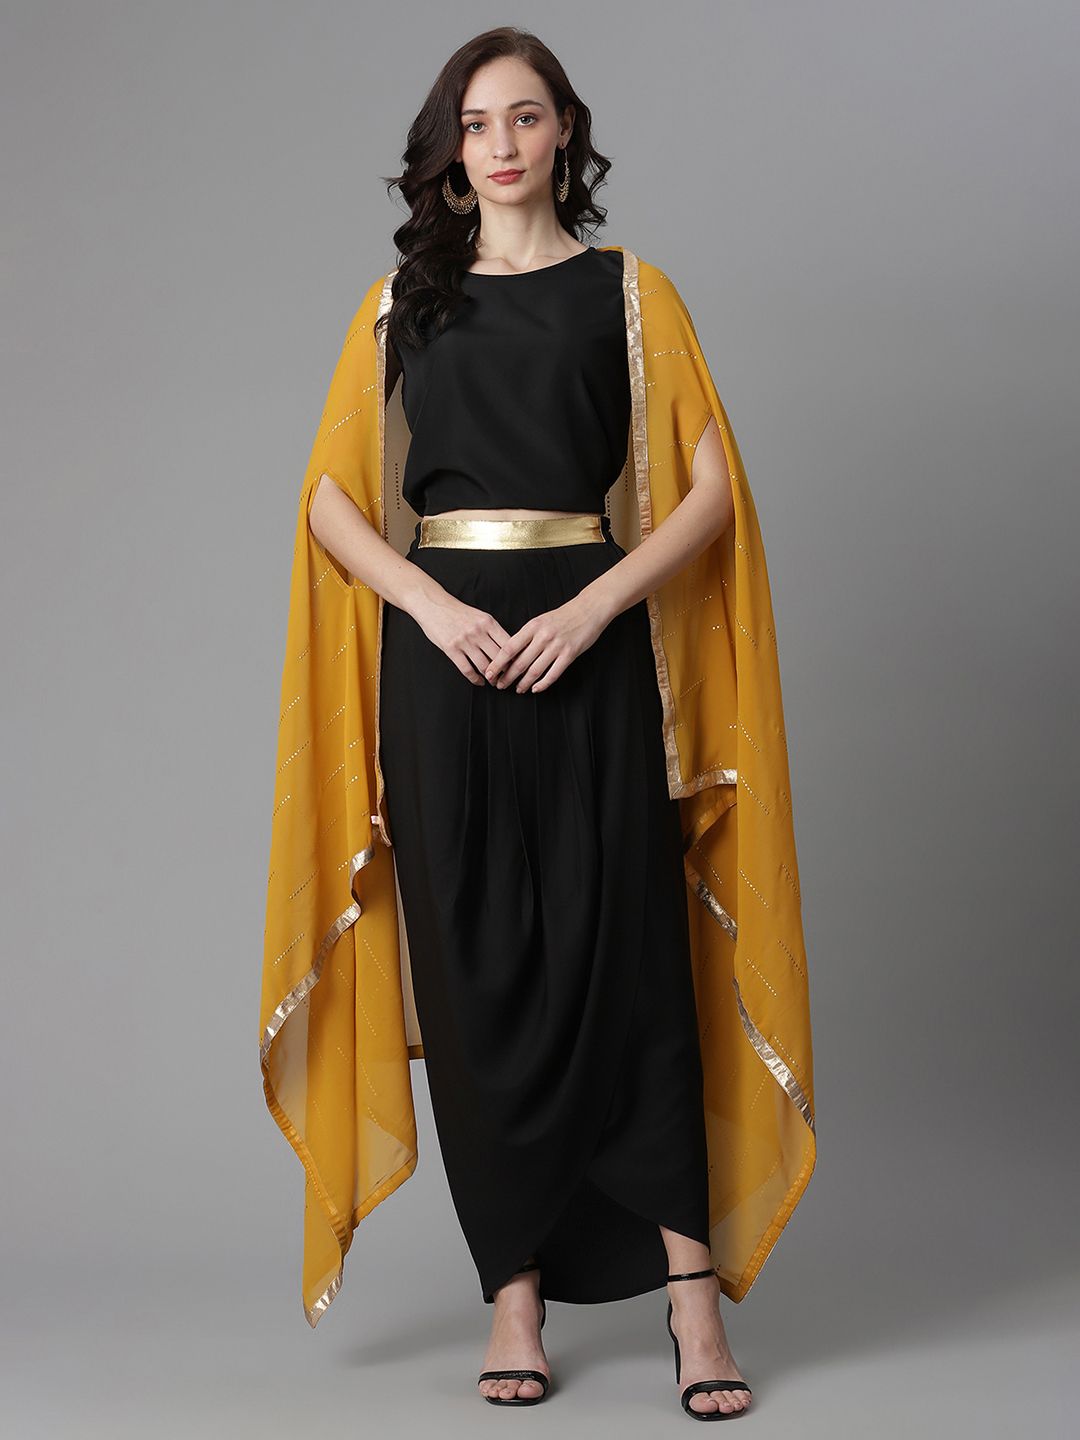 Ahalyaa Women's Black Crepe Top Skirt With Shrug